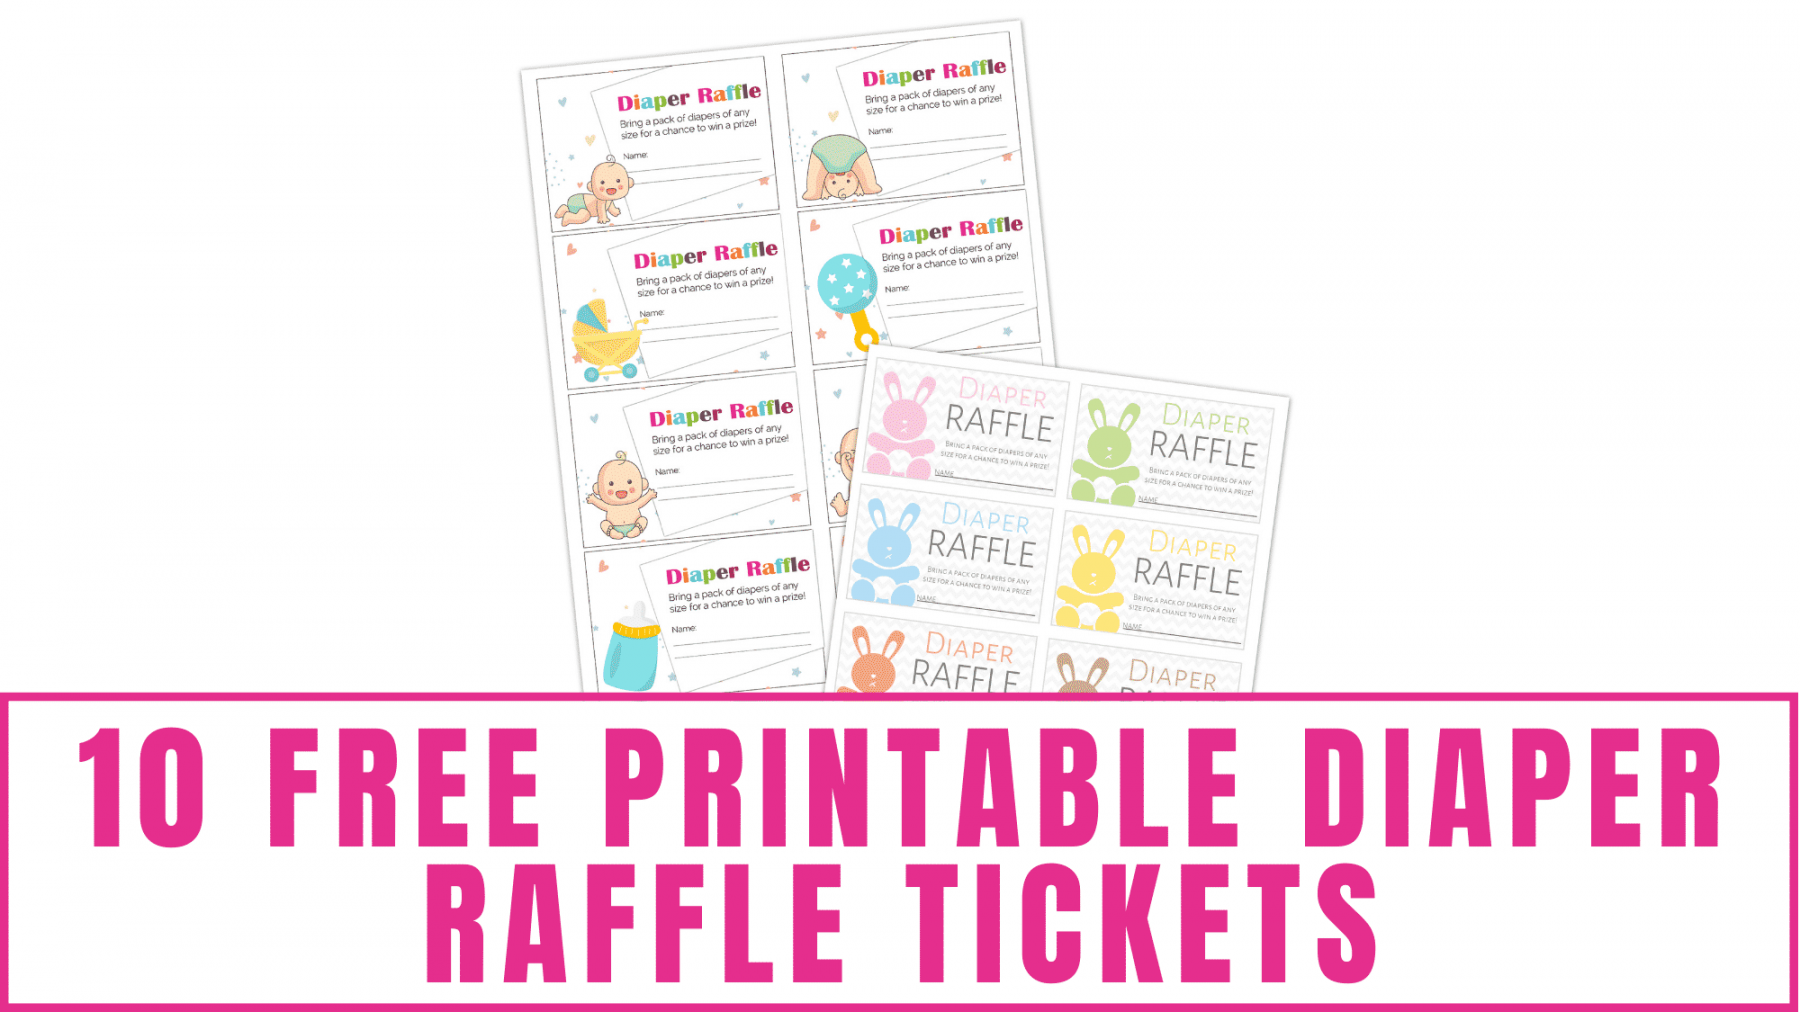 Free Printable Diaper Raffle Tickets - Freebie Finding Mom - FREE Printables - Diaper Raffle Tickets Printable Free